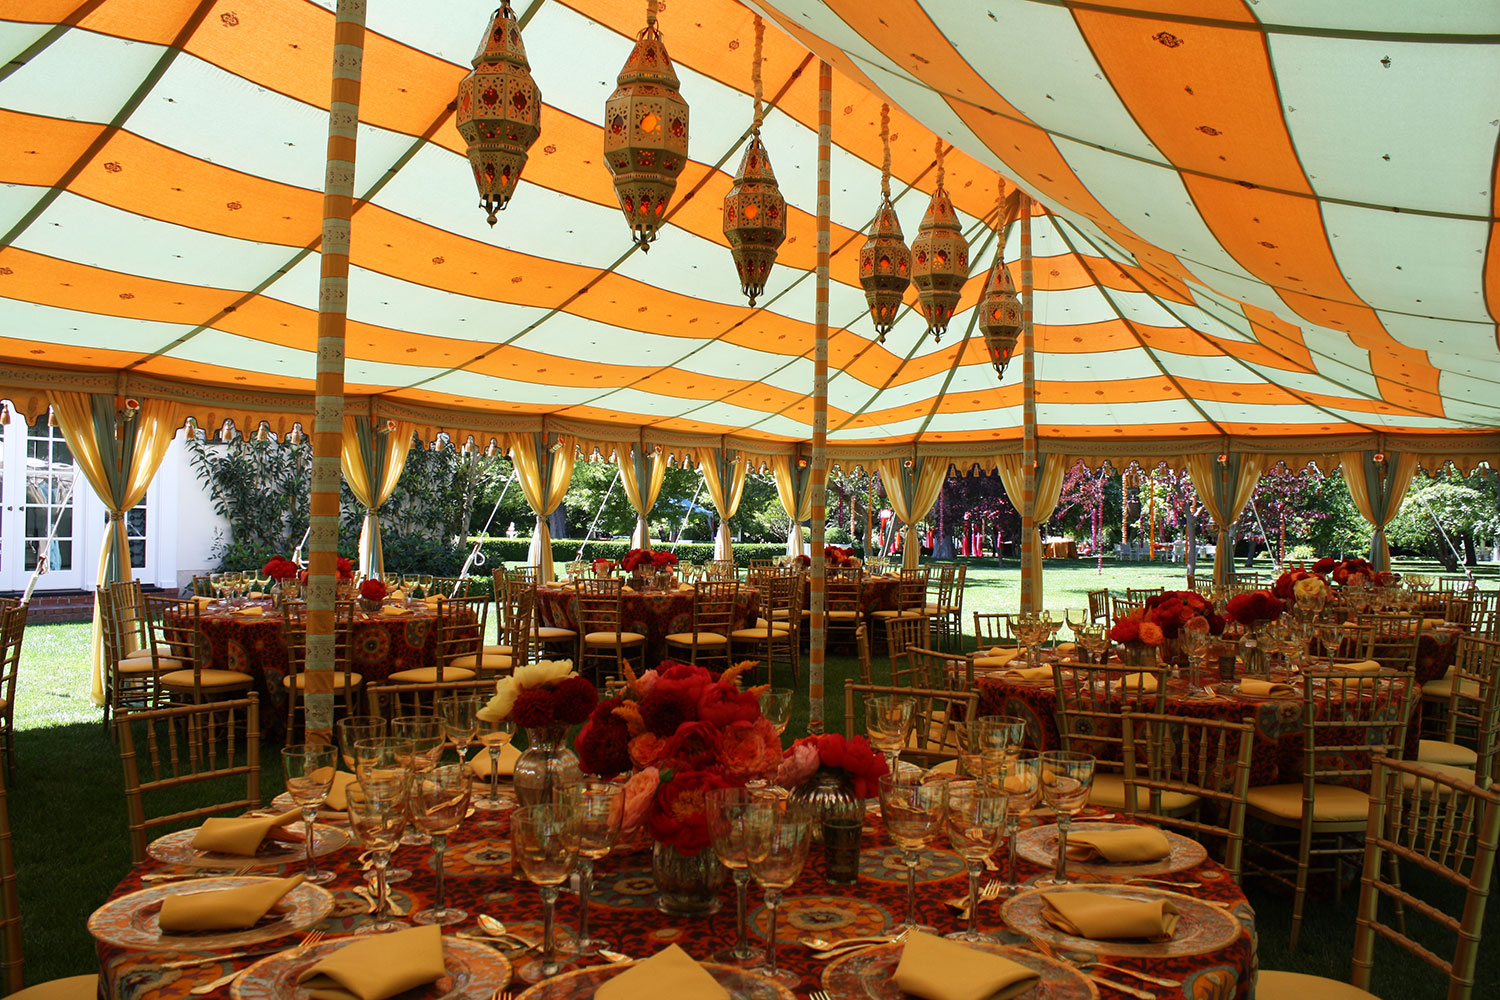 raj-tents-maharaja-dinner-setting-with-lamps.jpg